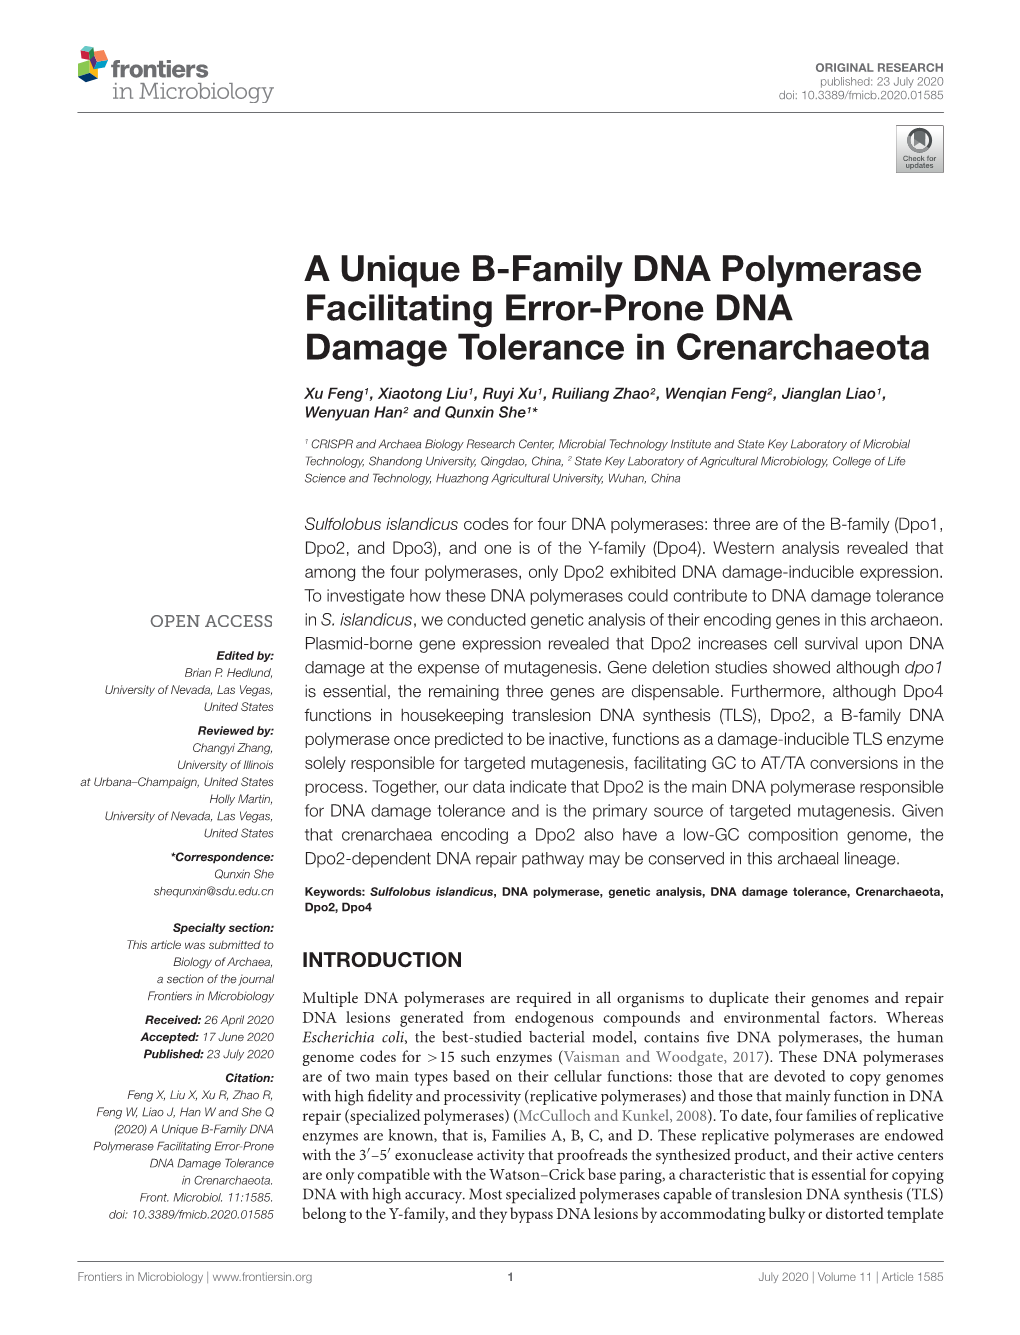 A Unique B-Family DNA Polymerase Facilitating Error-Prone DNA Damage Tolerance in Crenarchaeota